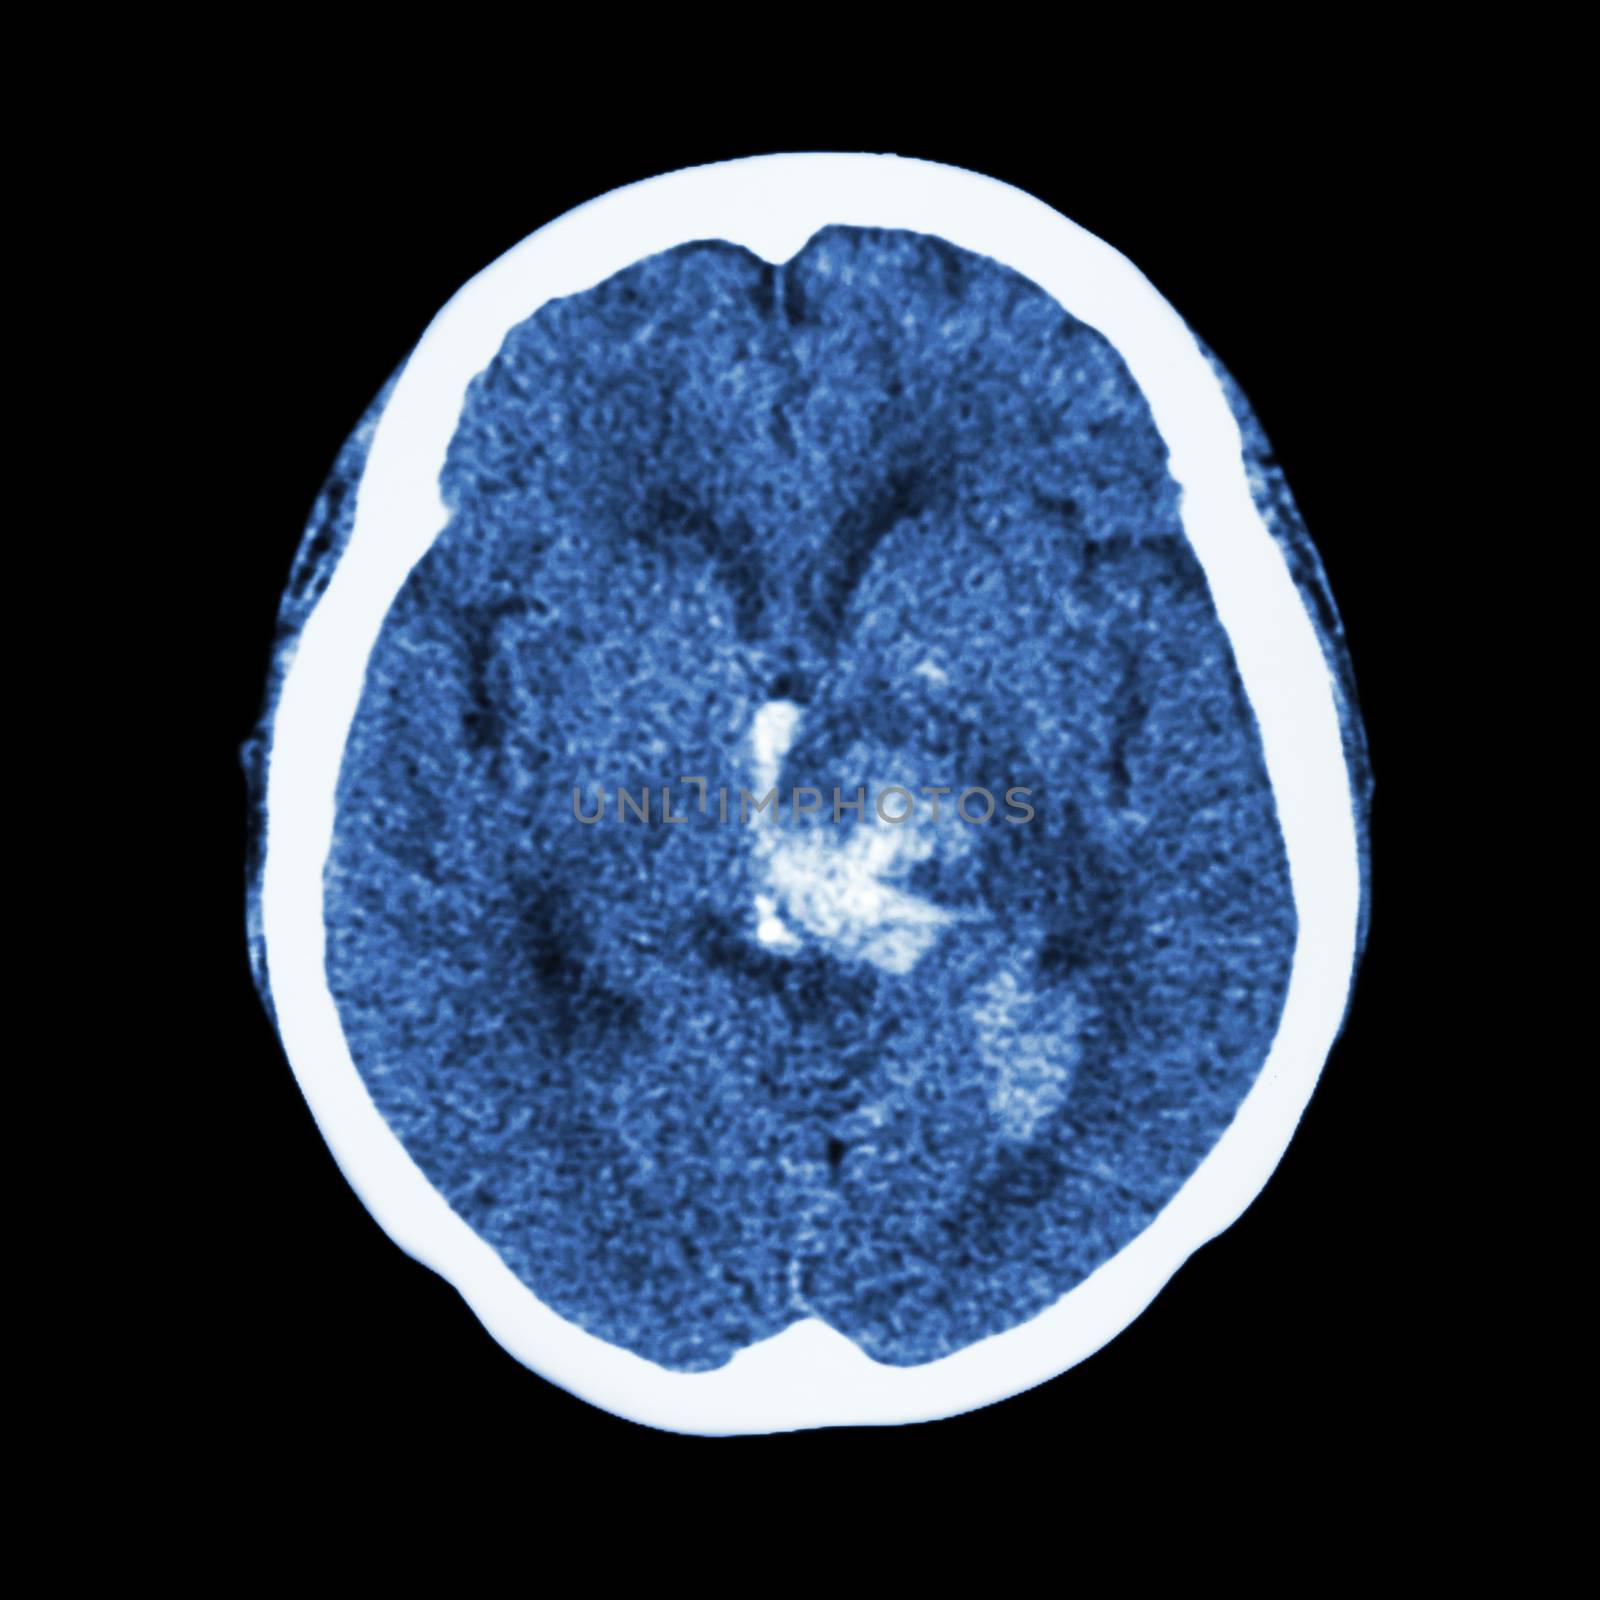 CT scan of brain : show hemorrhagic stroke by stockdevil